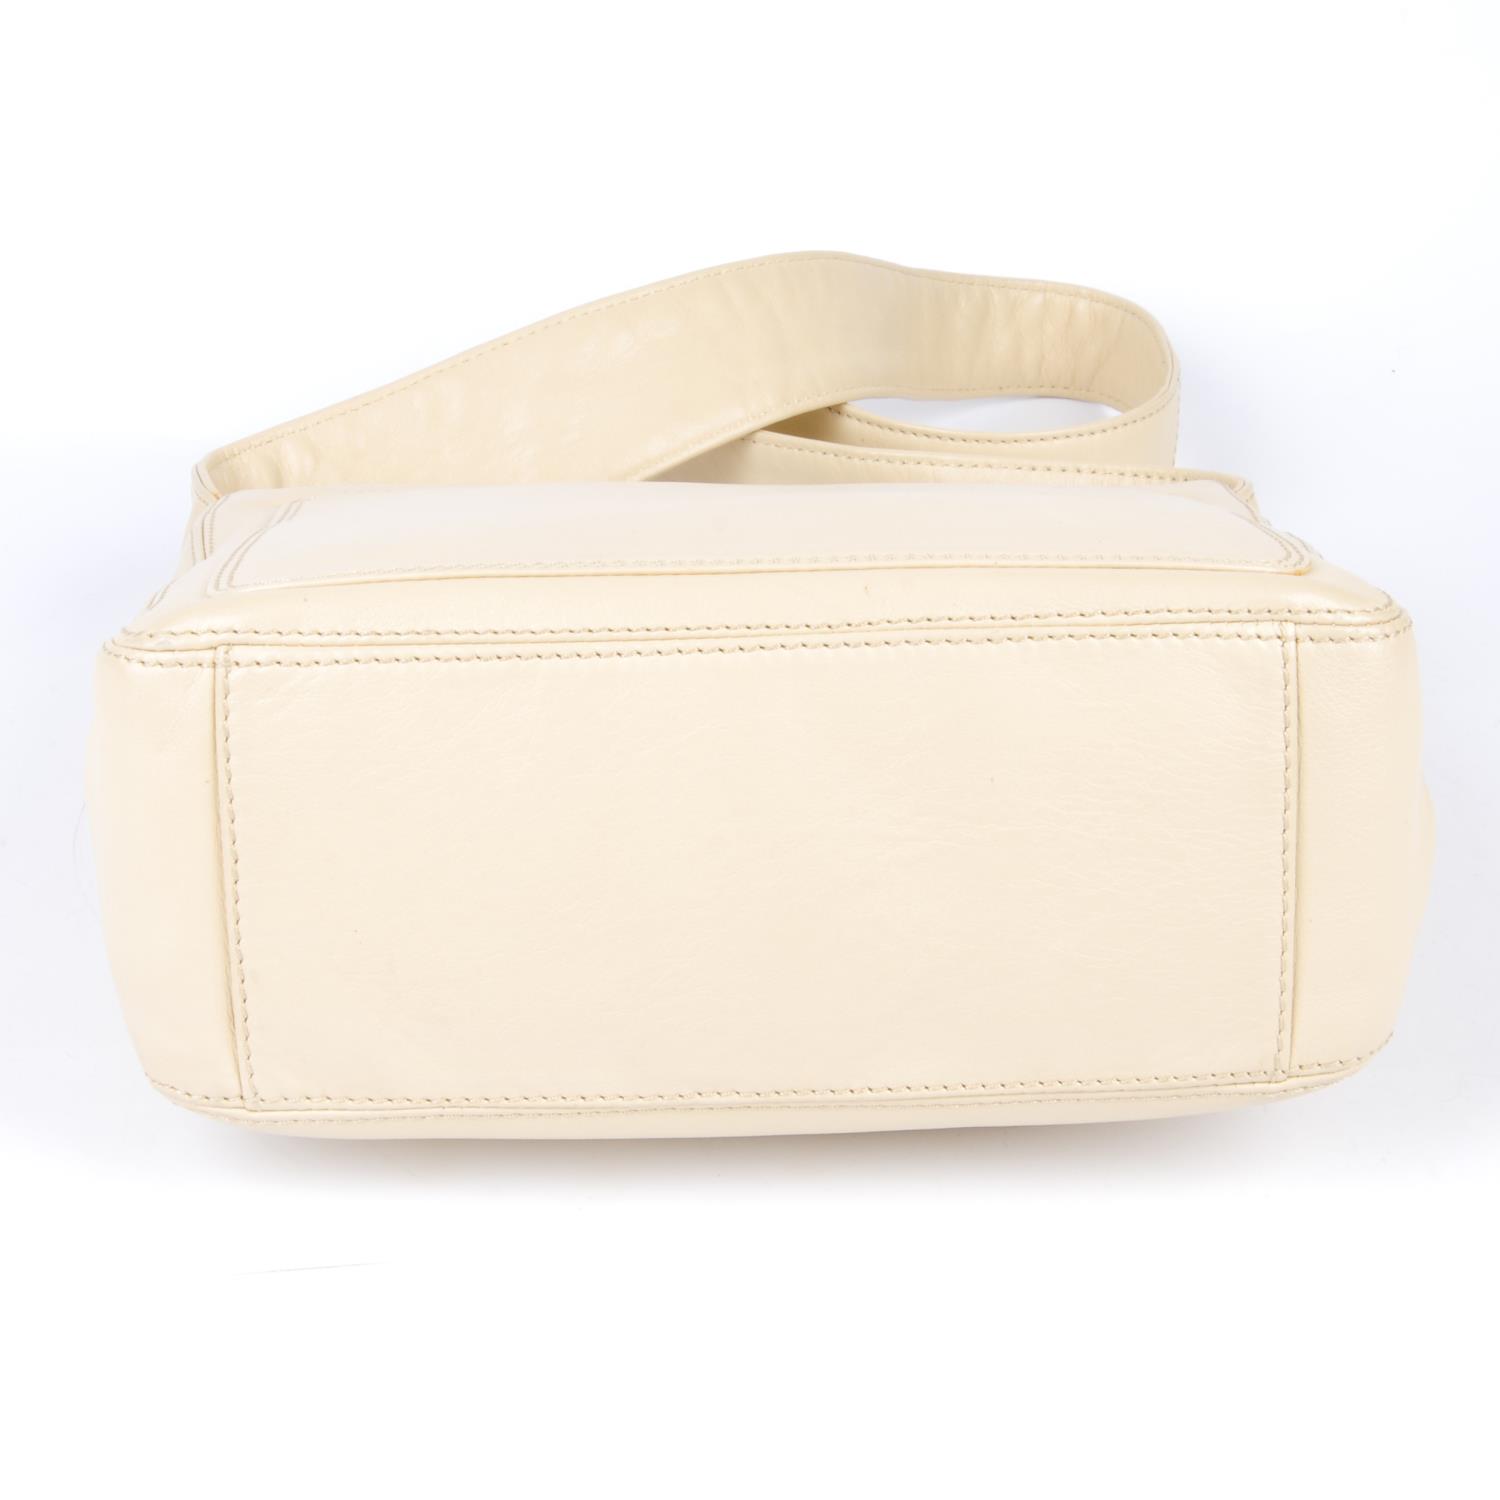 CHANEL - an ivory leather Flap handbag. - Image 5 of 5